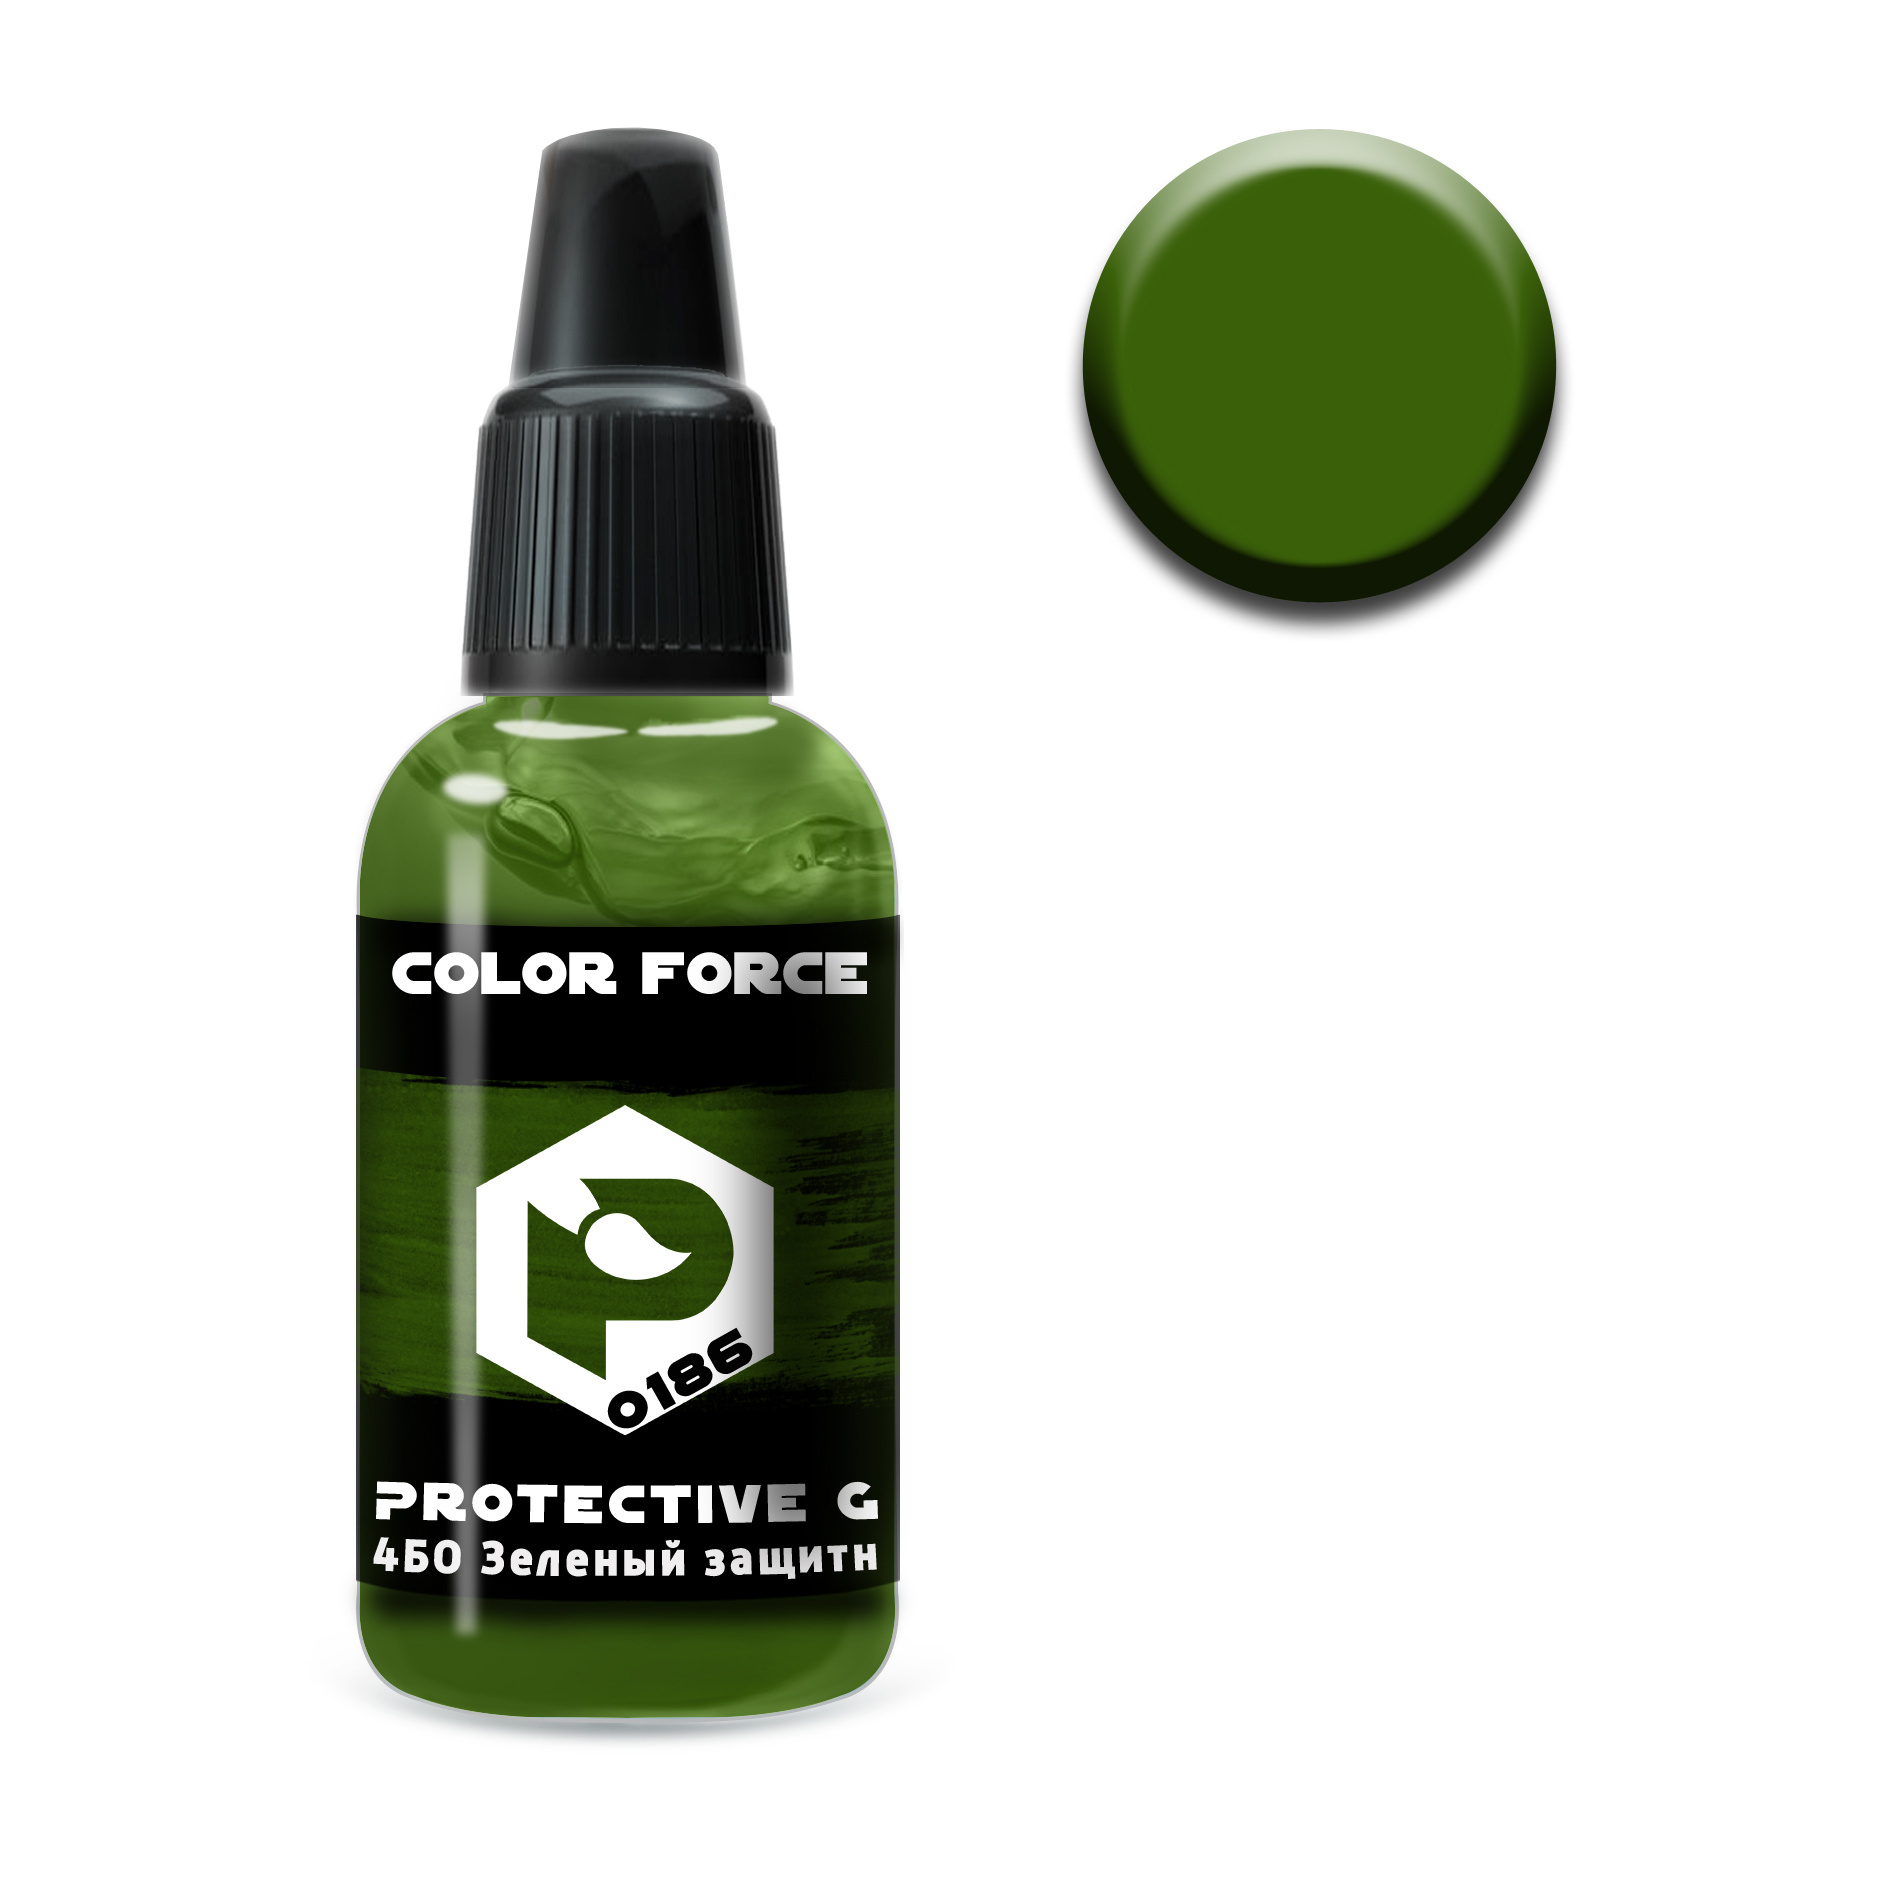 art.0186 Pacific88 airbrush Paint 4BO Green protective (Protective Green 4BO)